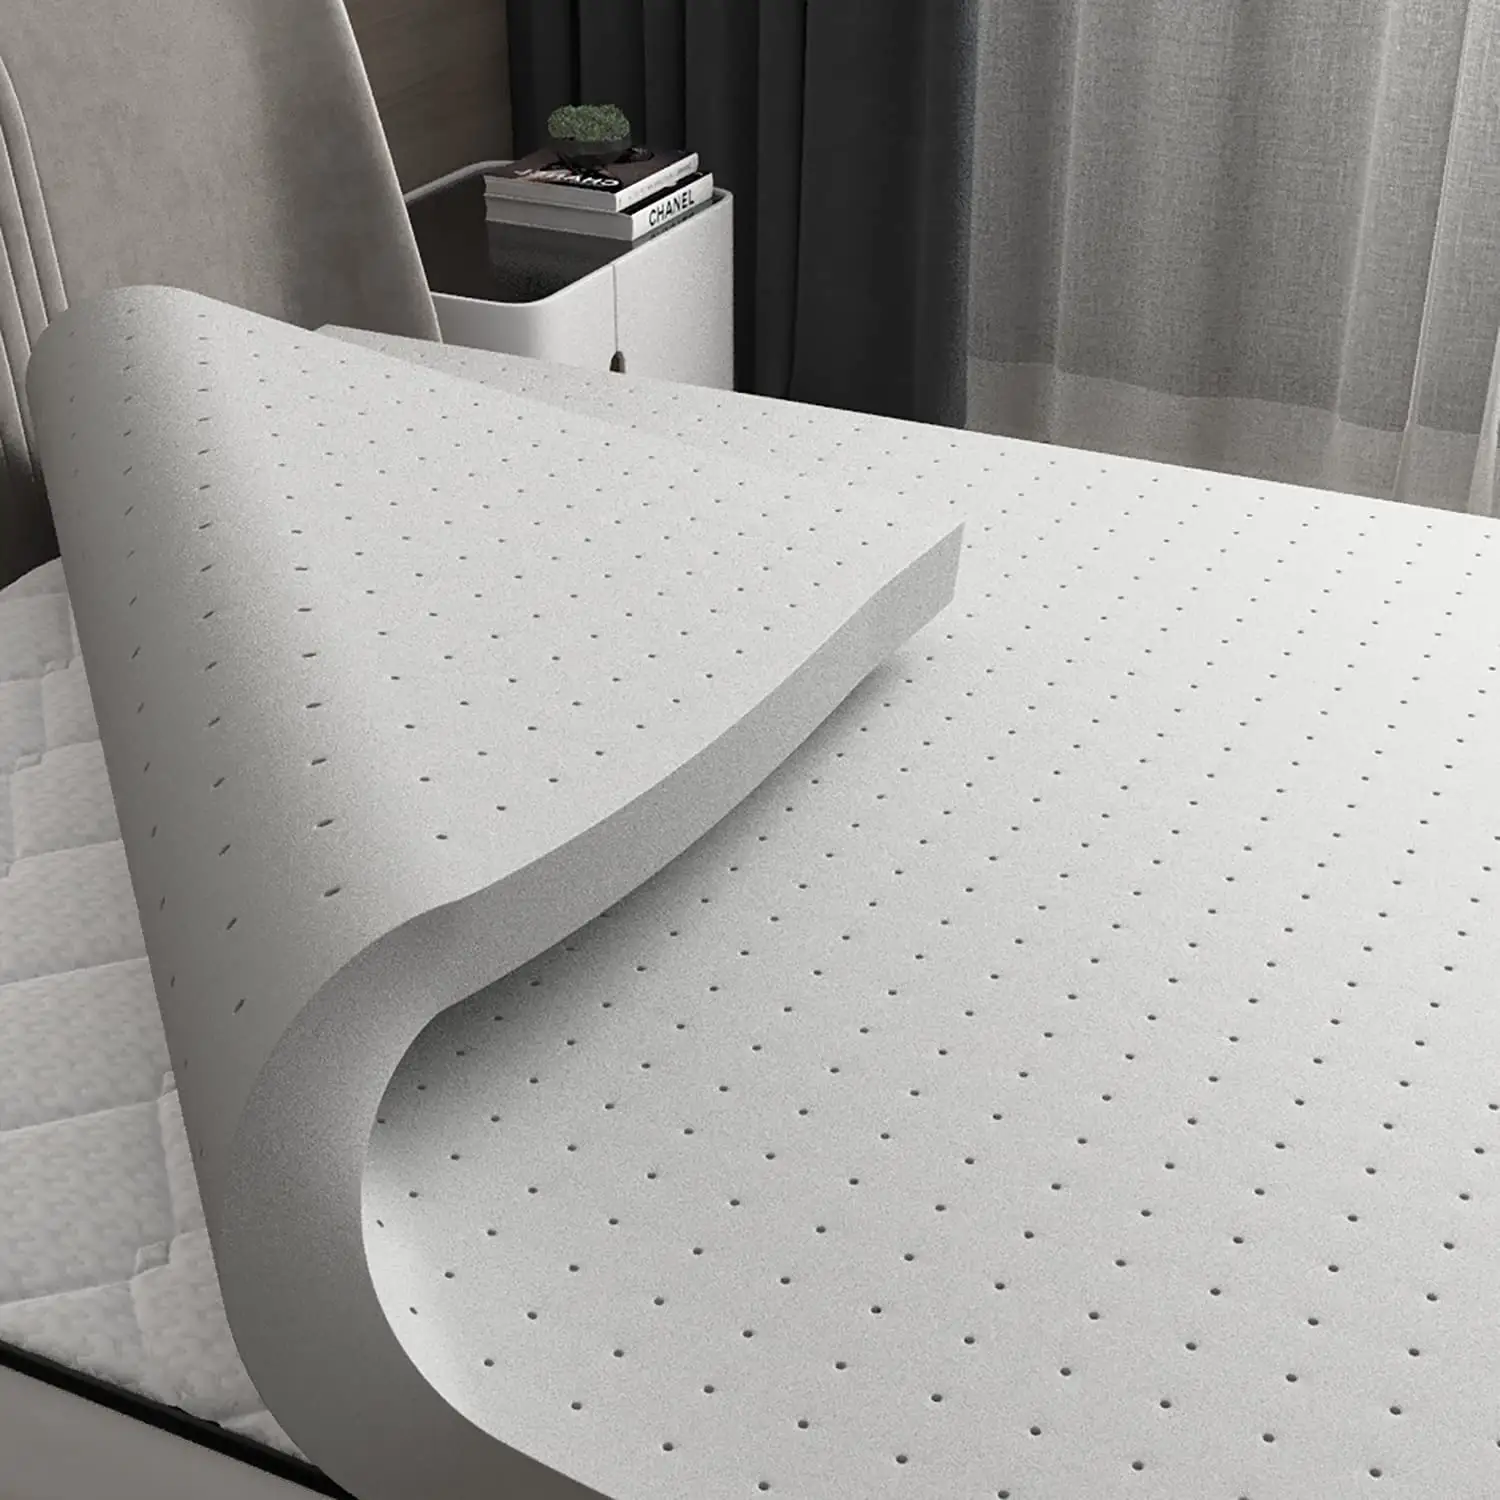 Bed Mattress Topper Pads Bamboo 3 Inch Cooling Memory Foam Queen King Size Home Furniture mattress pad Modern foam Topper